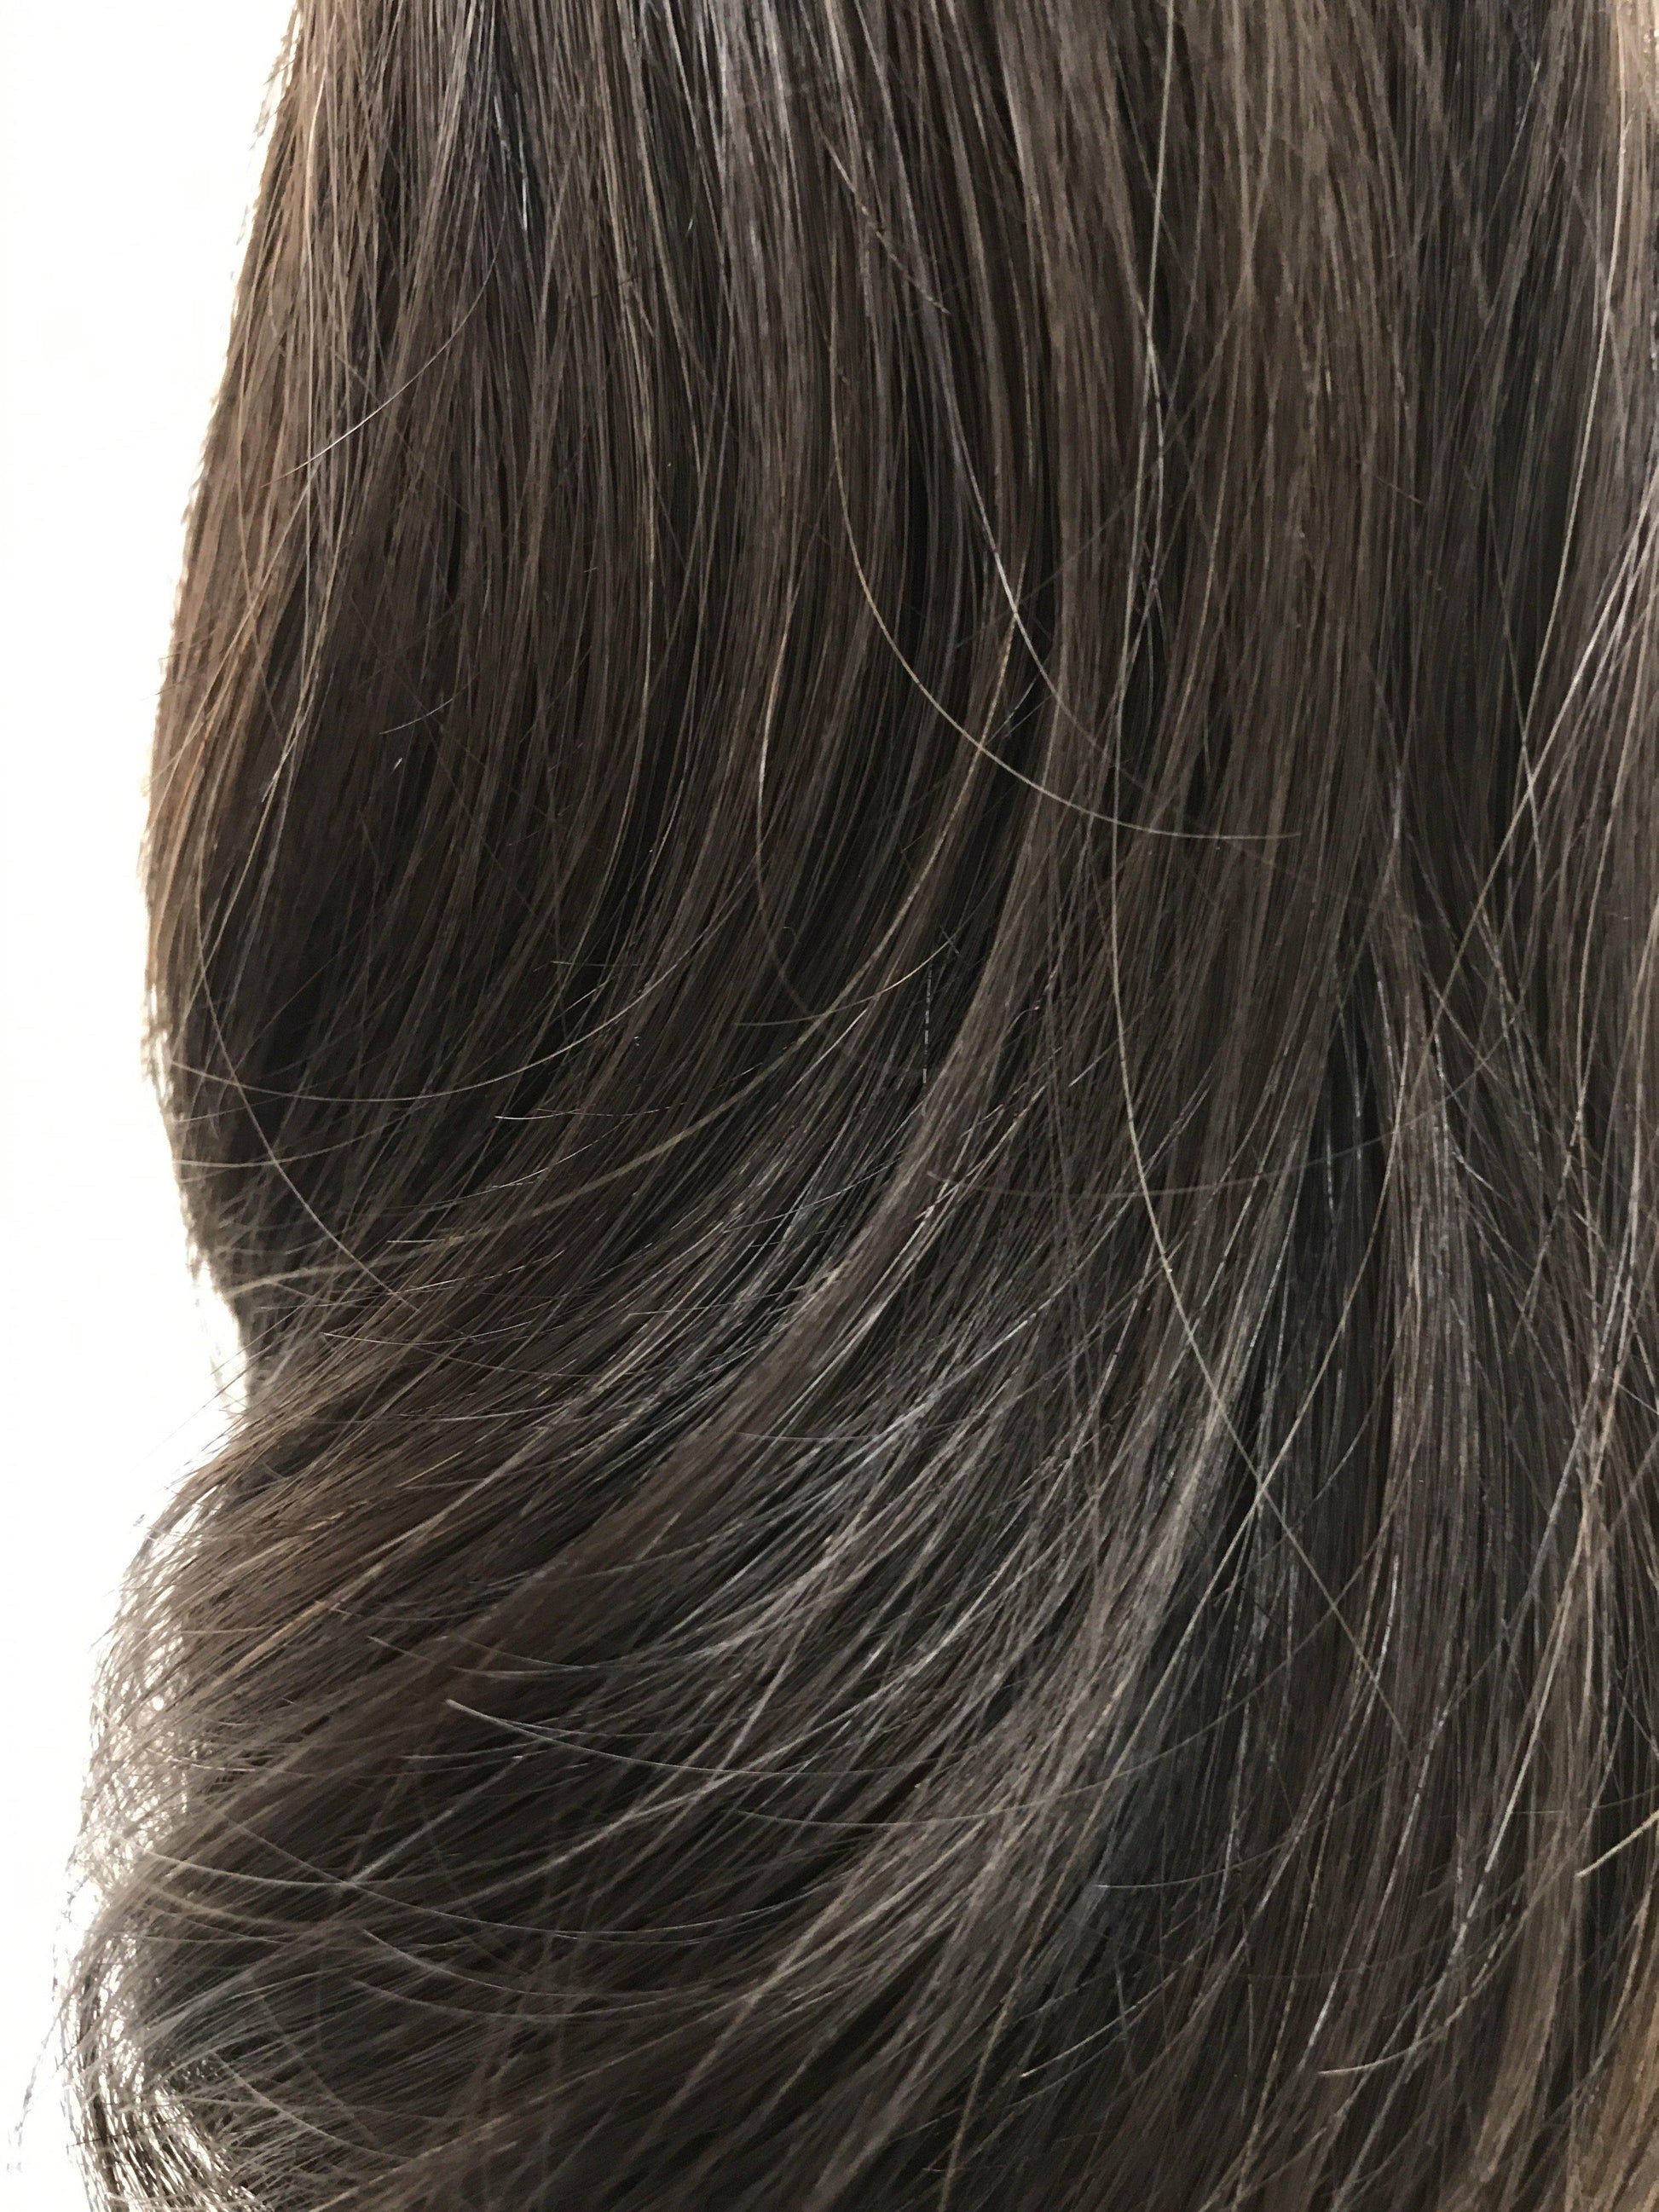 Brazilian Virgin Remy Human Hair, Nail-Tips, Wavy, 20'', Virgin, Quick Shipping!-Virgin Hair & Beauty, The Best Hair Extensions, Real Virgin Human Hair.